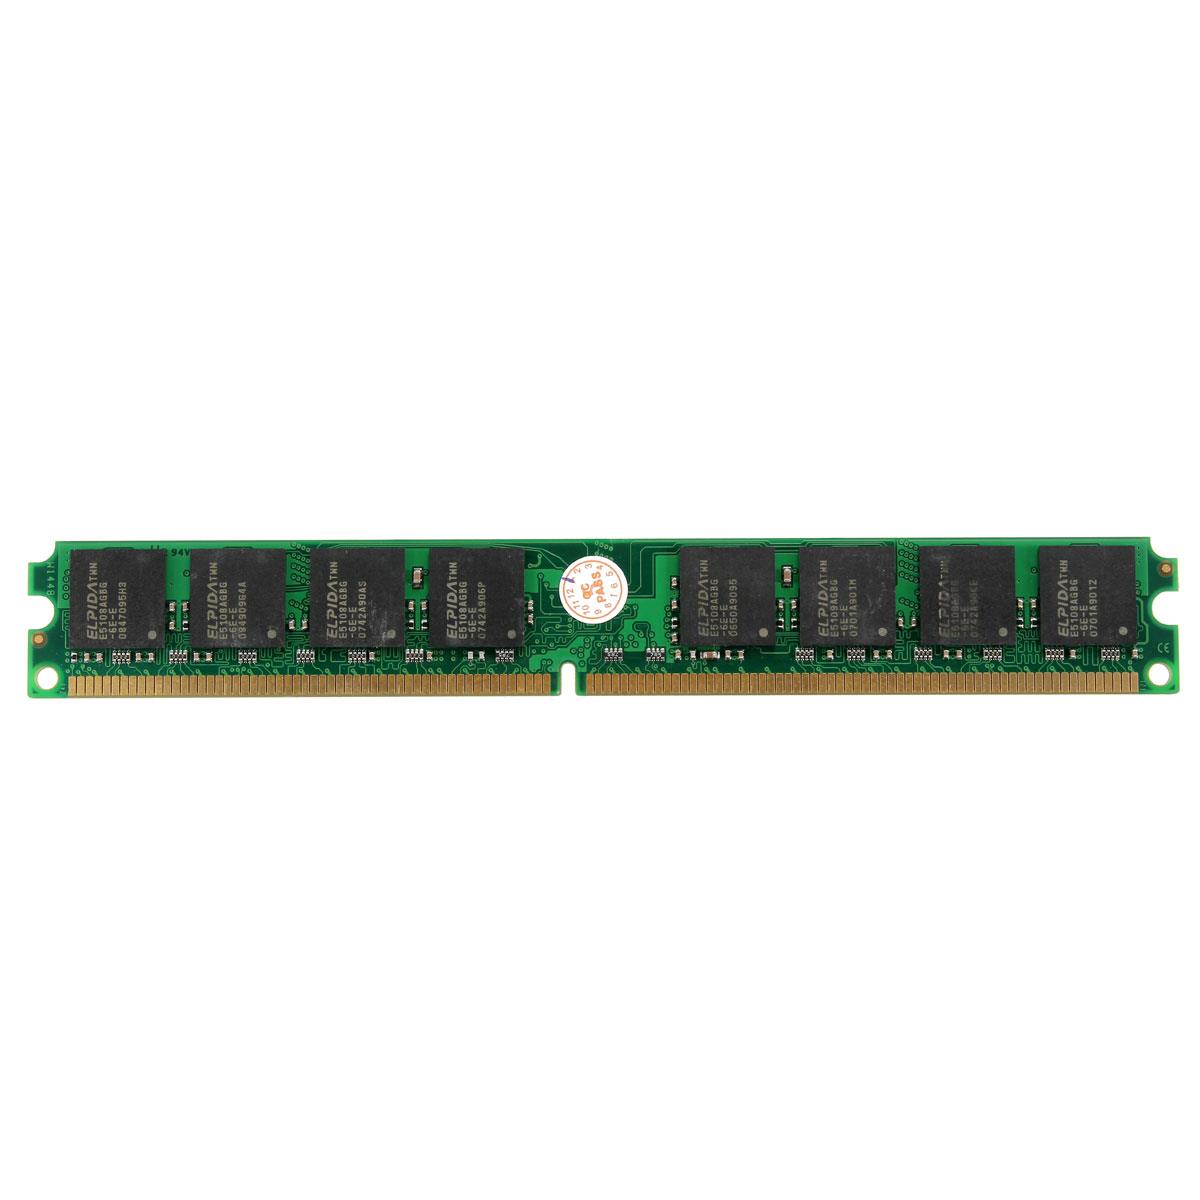 XIEDE 2GB(2x1GB)DDR2 533 PC2 4200 Non ECC Computer Desktop PC DIMM Memory RAM 240 pins